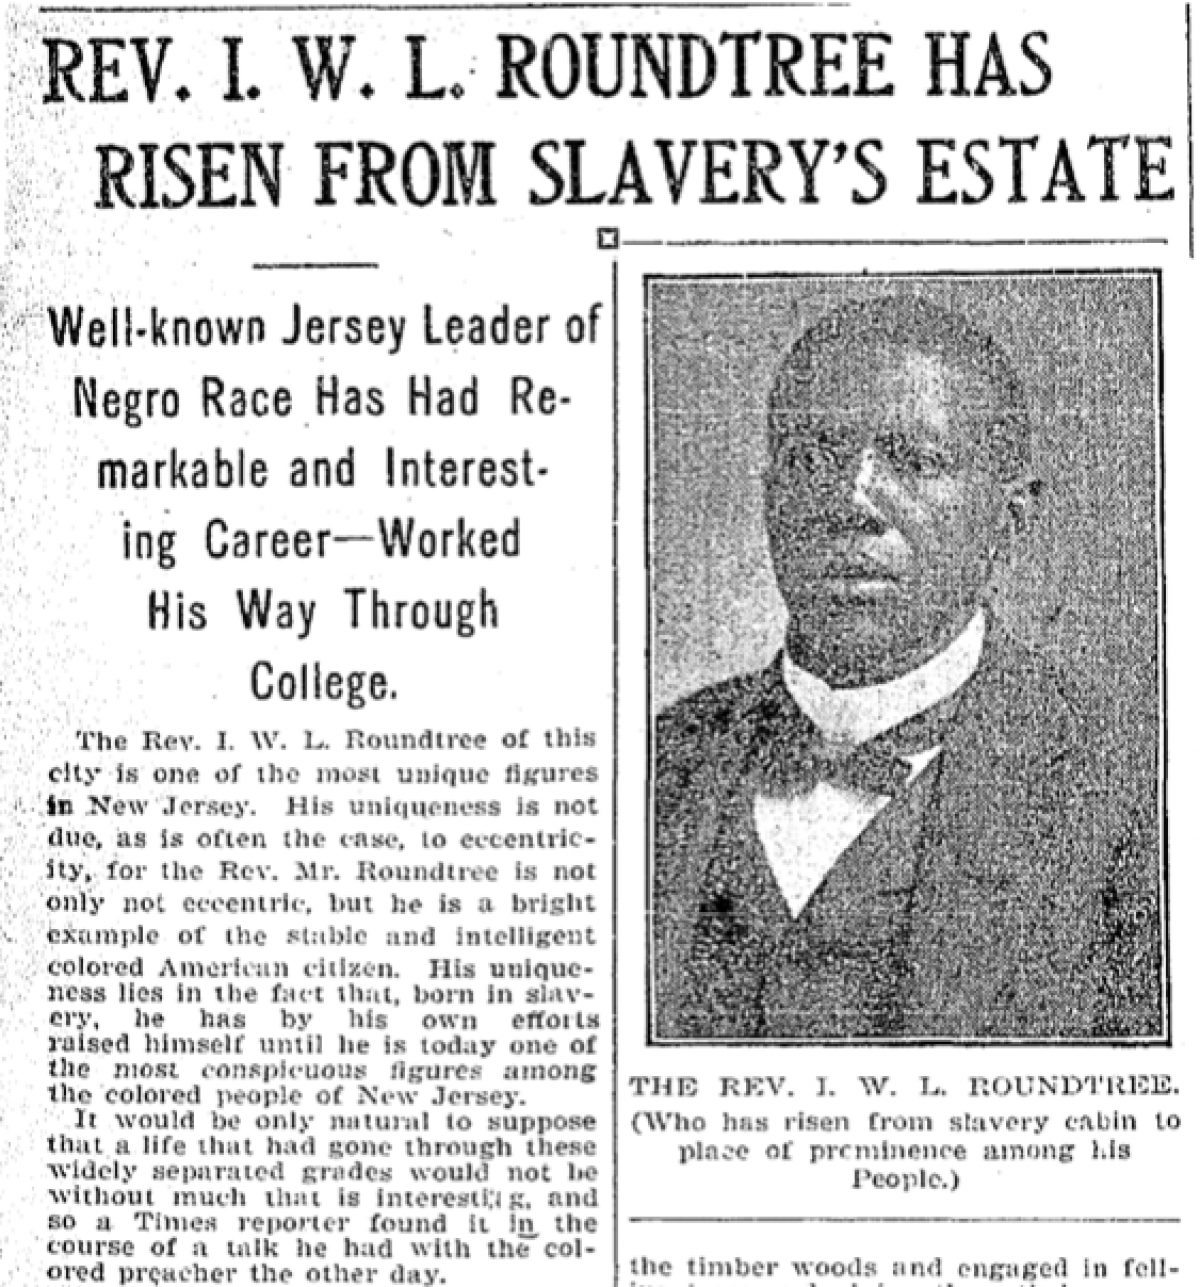 "Rev. I. W. L. Roundtree Has Risen From Slavery's Estate"